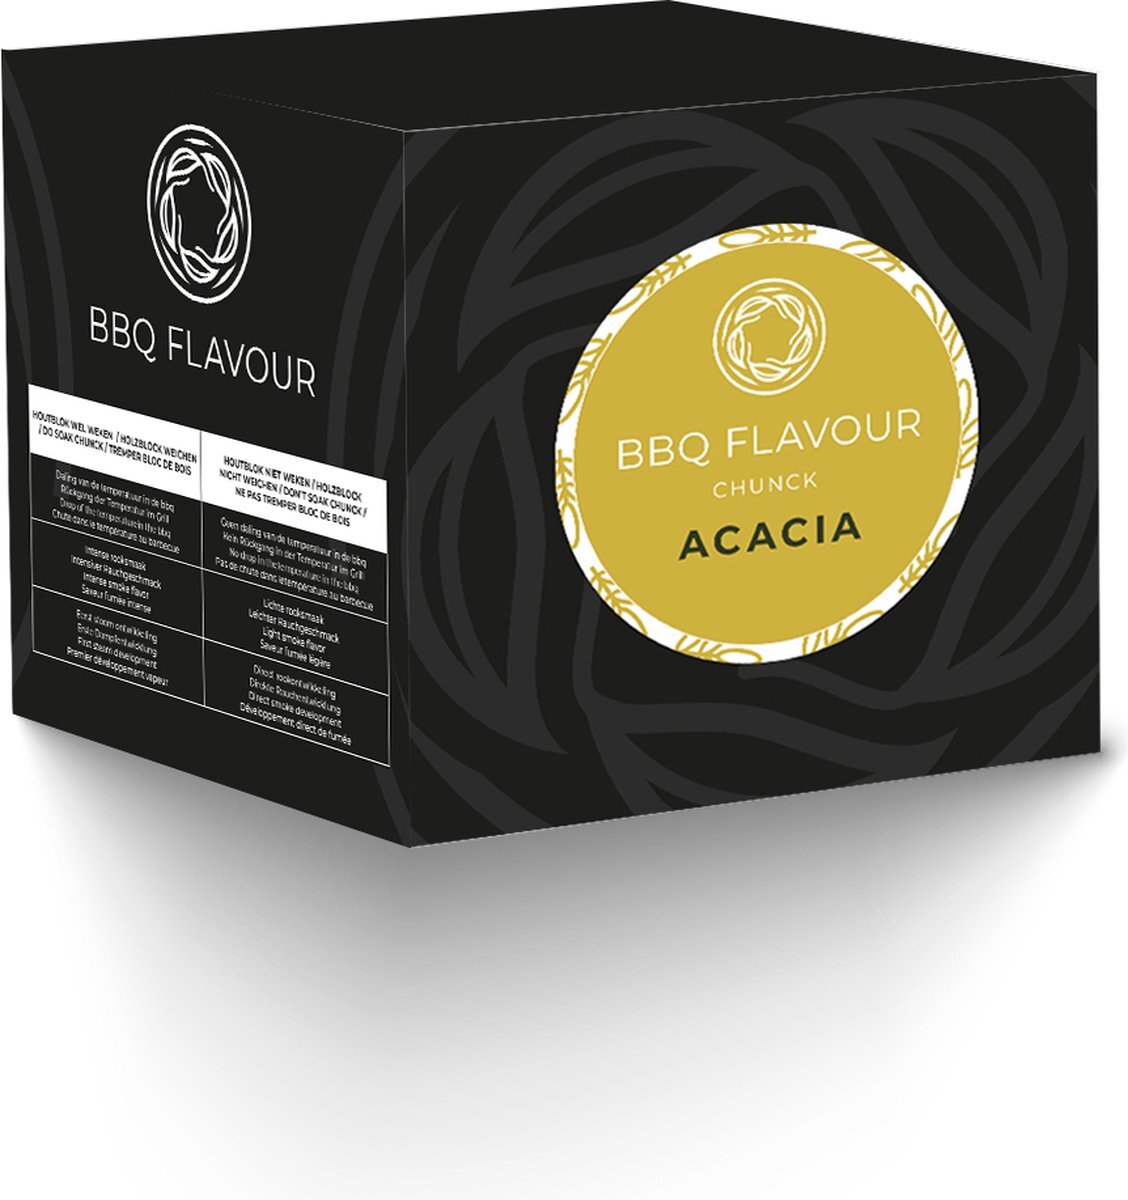 BBQ Flavour rookhout chuncks acacia